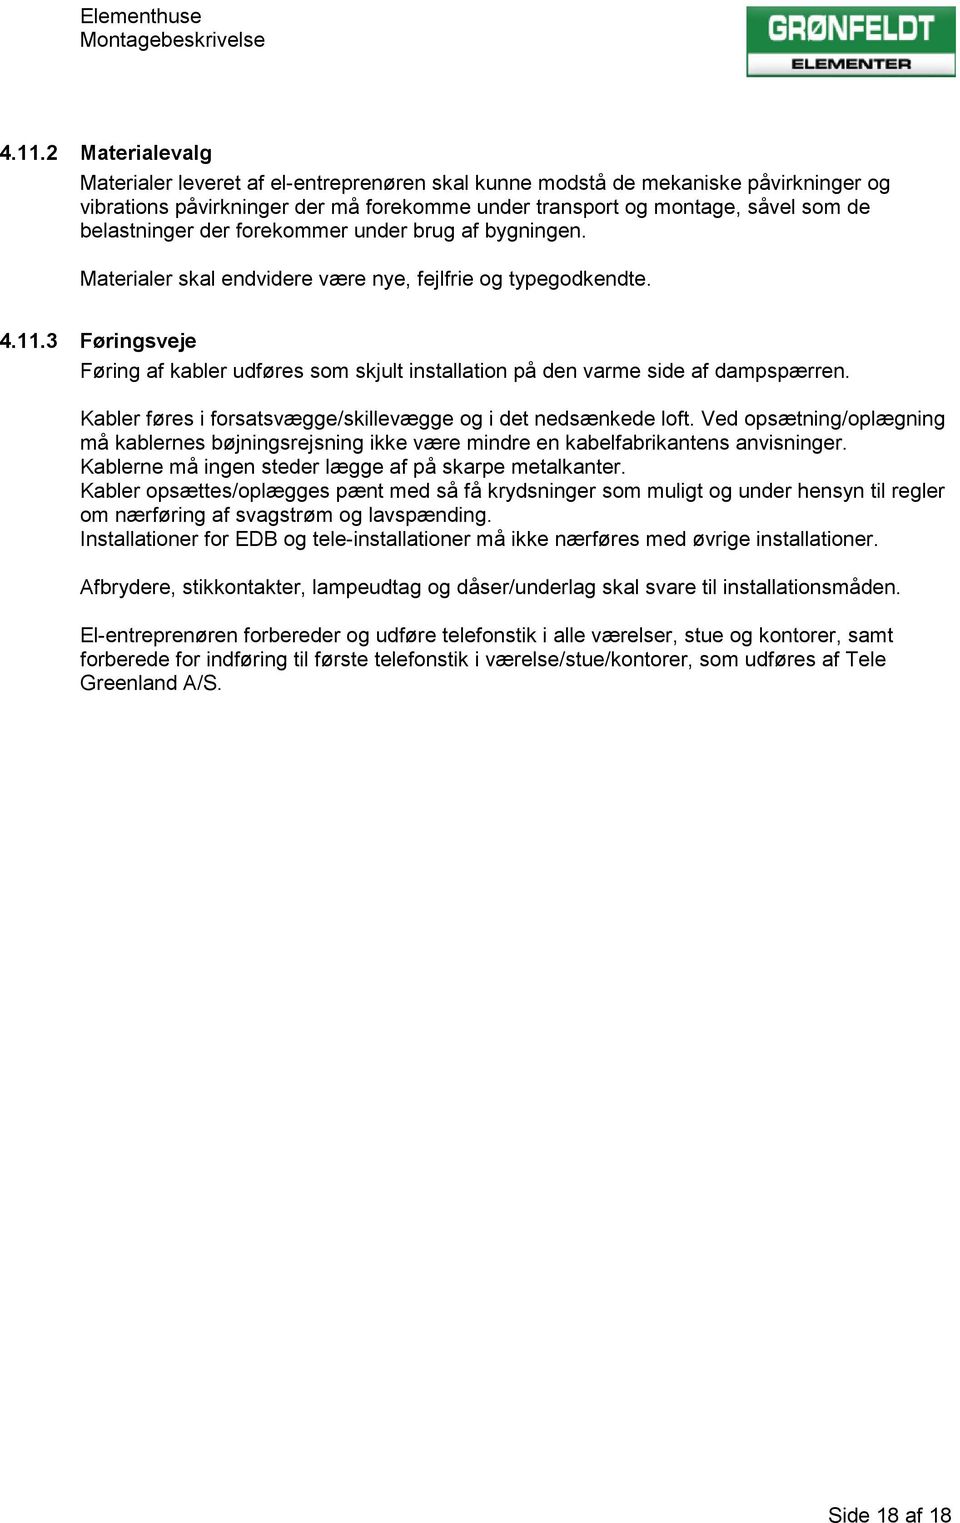 Grønfeldt Elementhuse Montagebeskrivelse - PDF Free Download